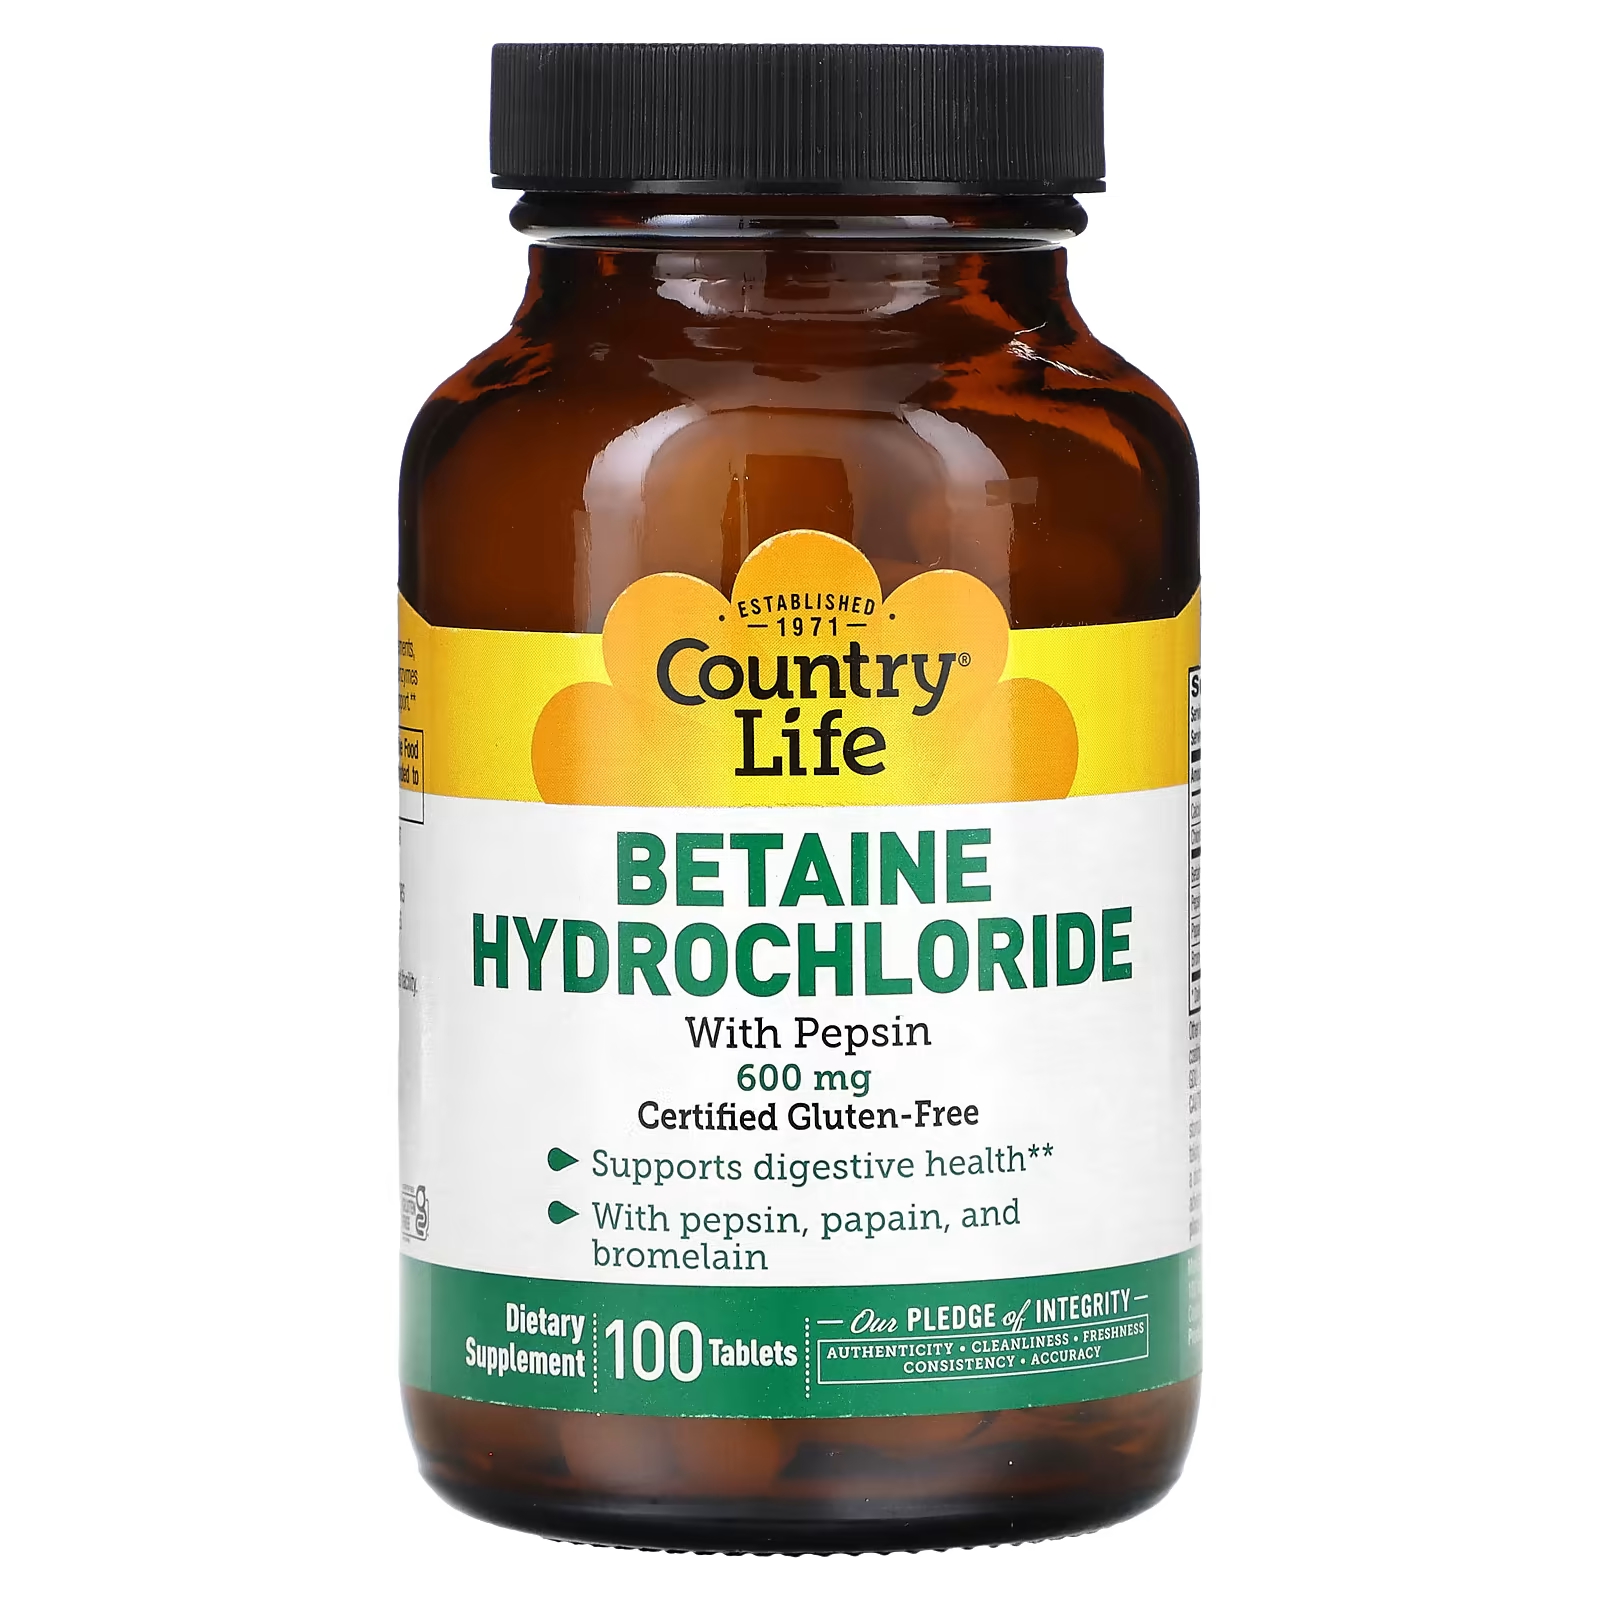 Пищевая добавка Country Life Бетаина гидрохлорид с пепсином 600 мг, 100 таблеток